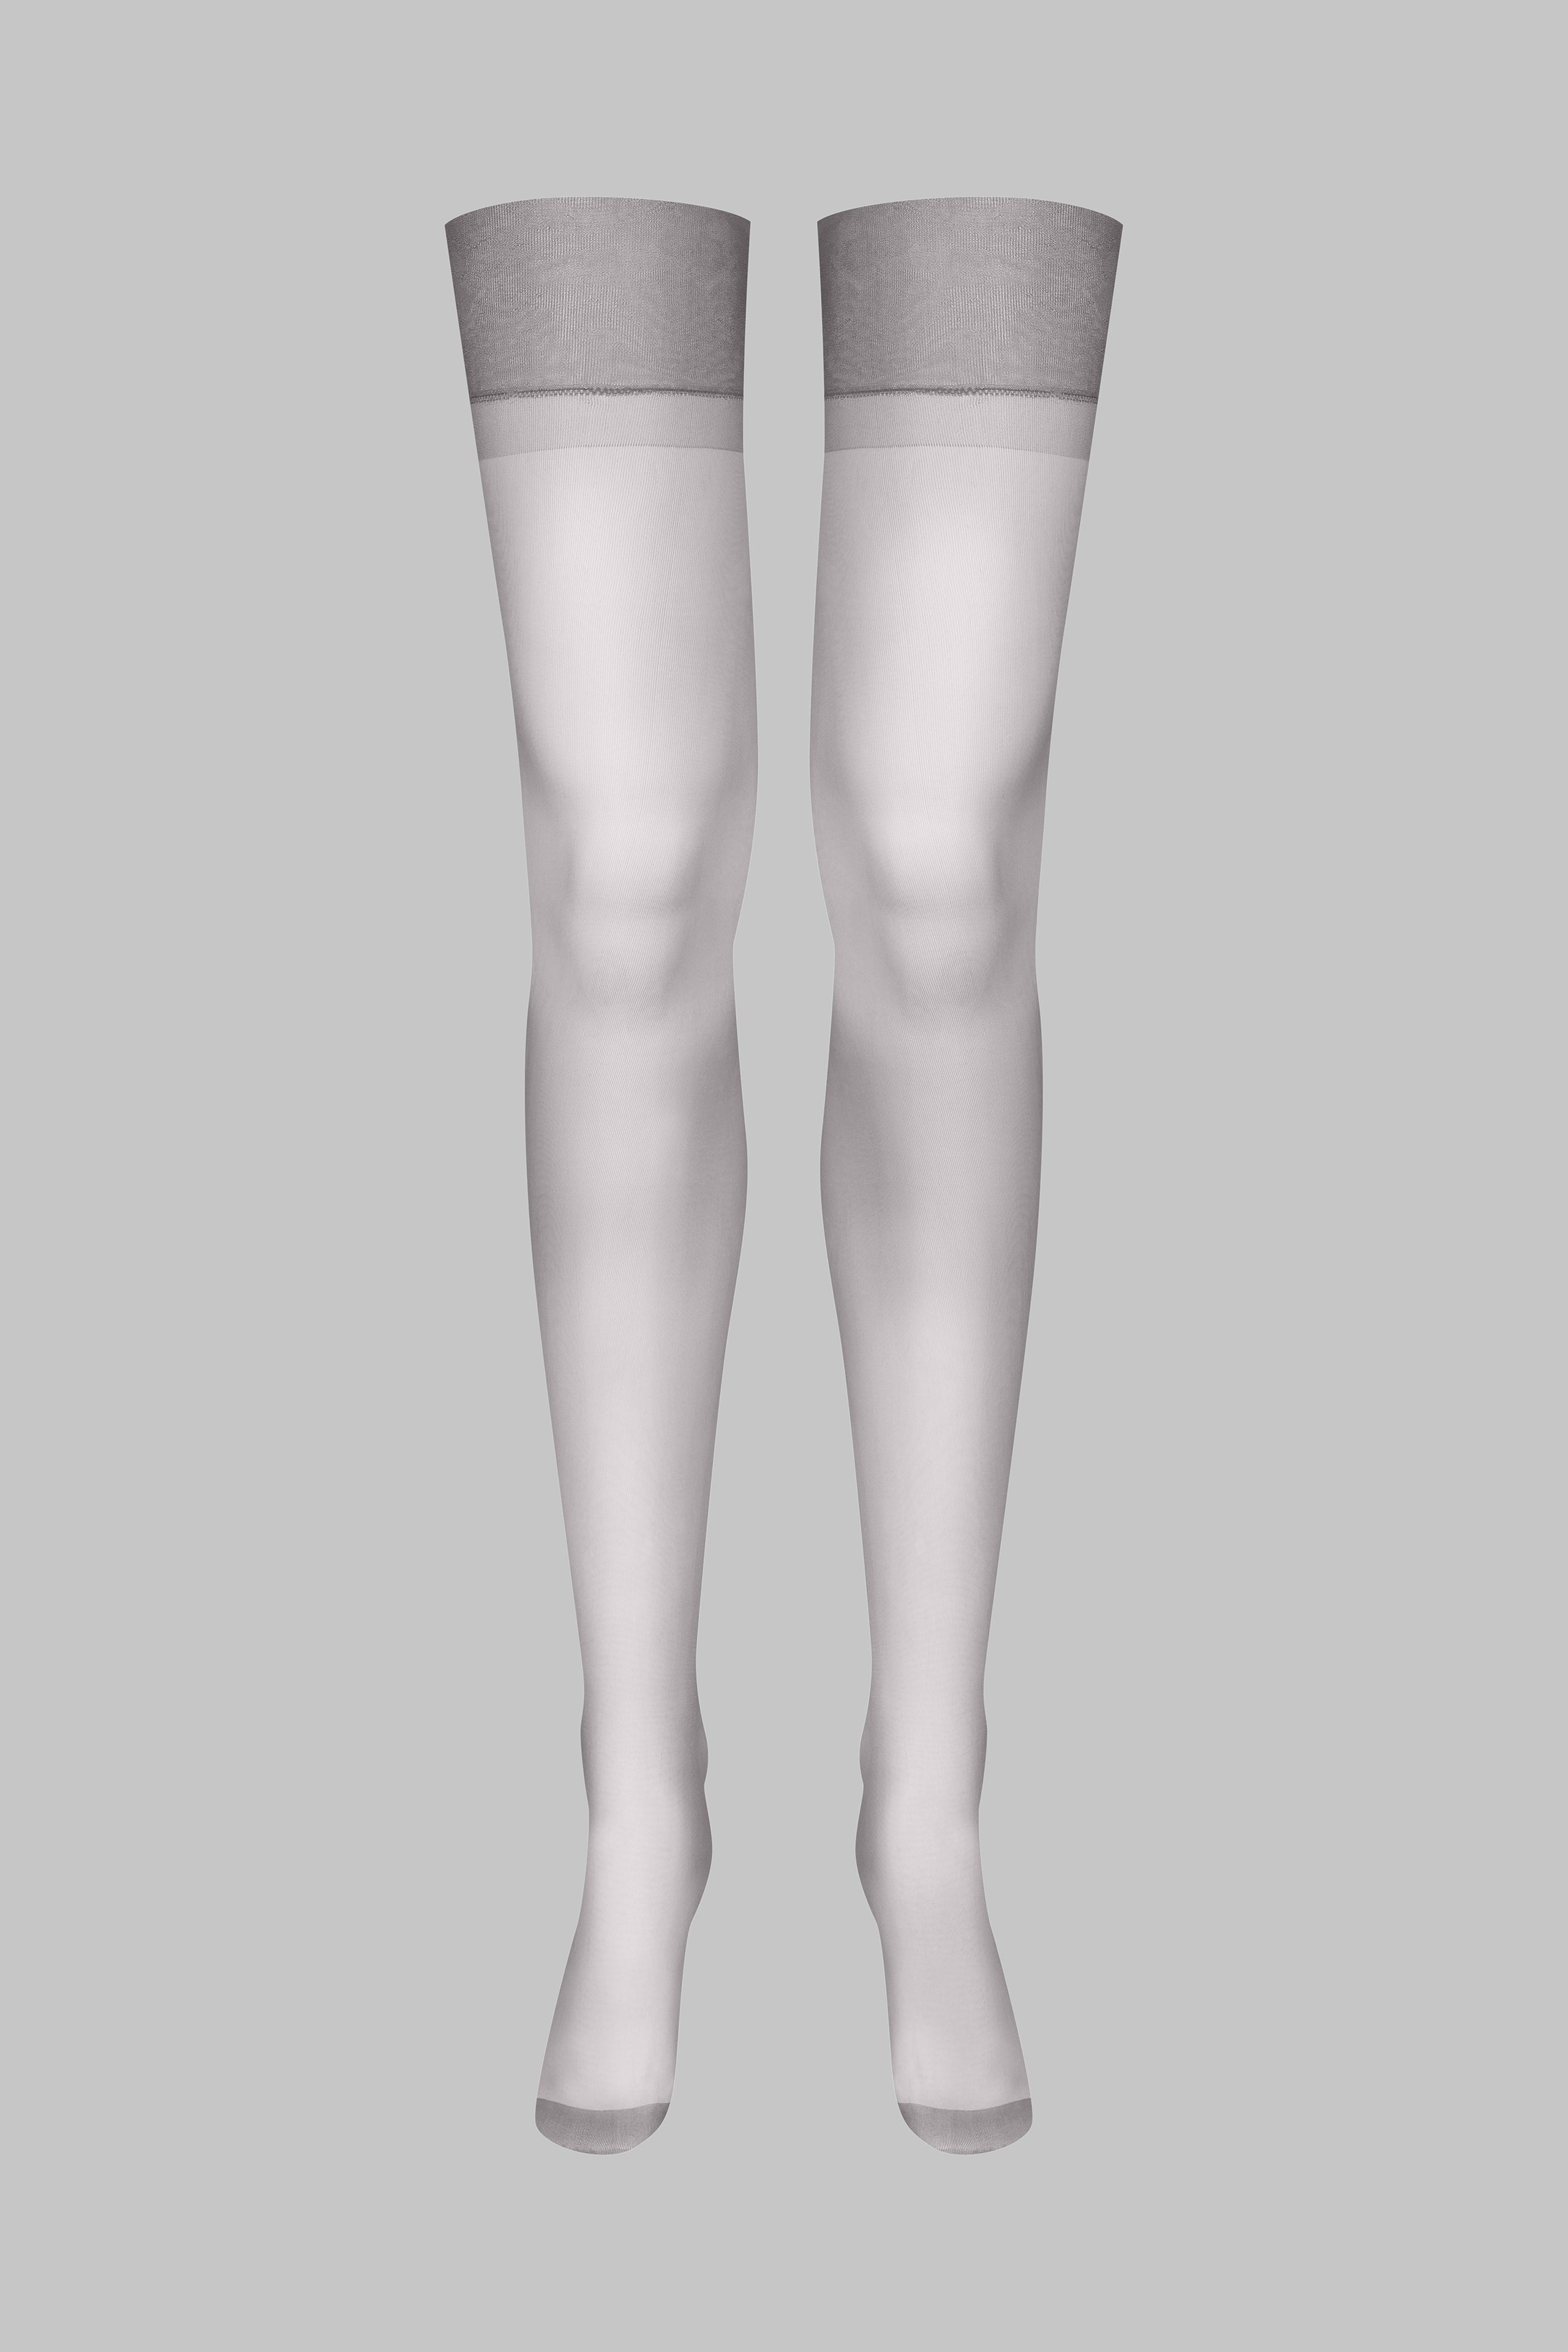 Nylon stockings - 15D - Gray